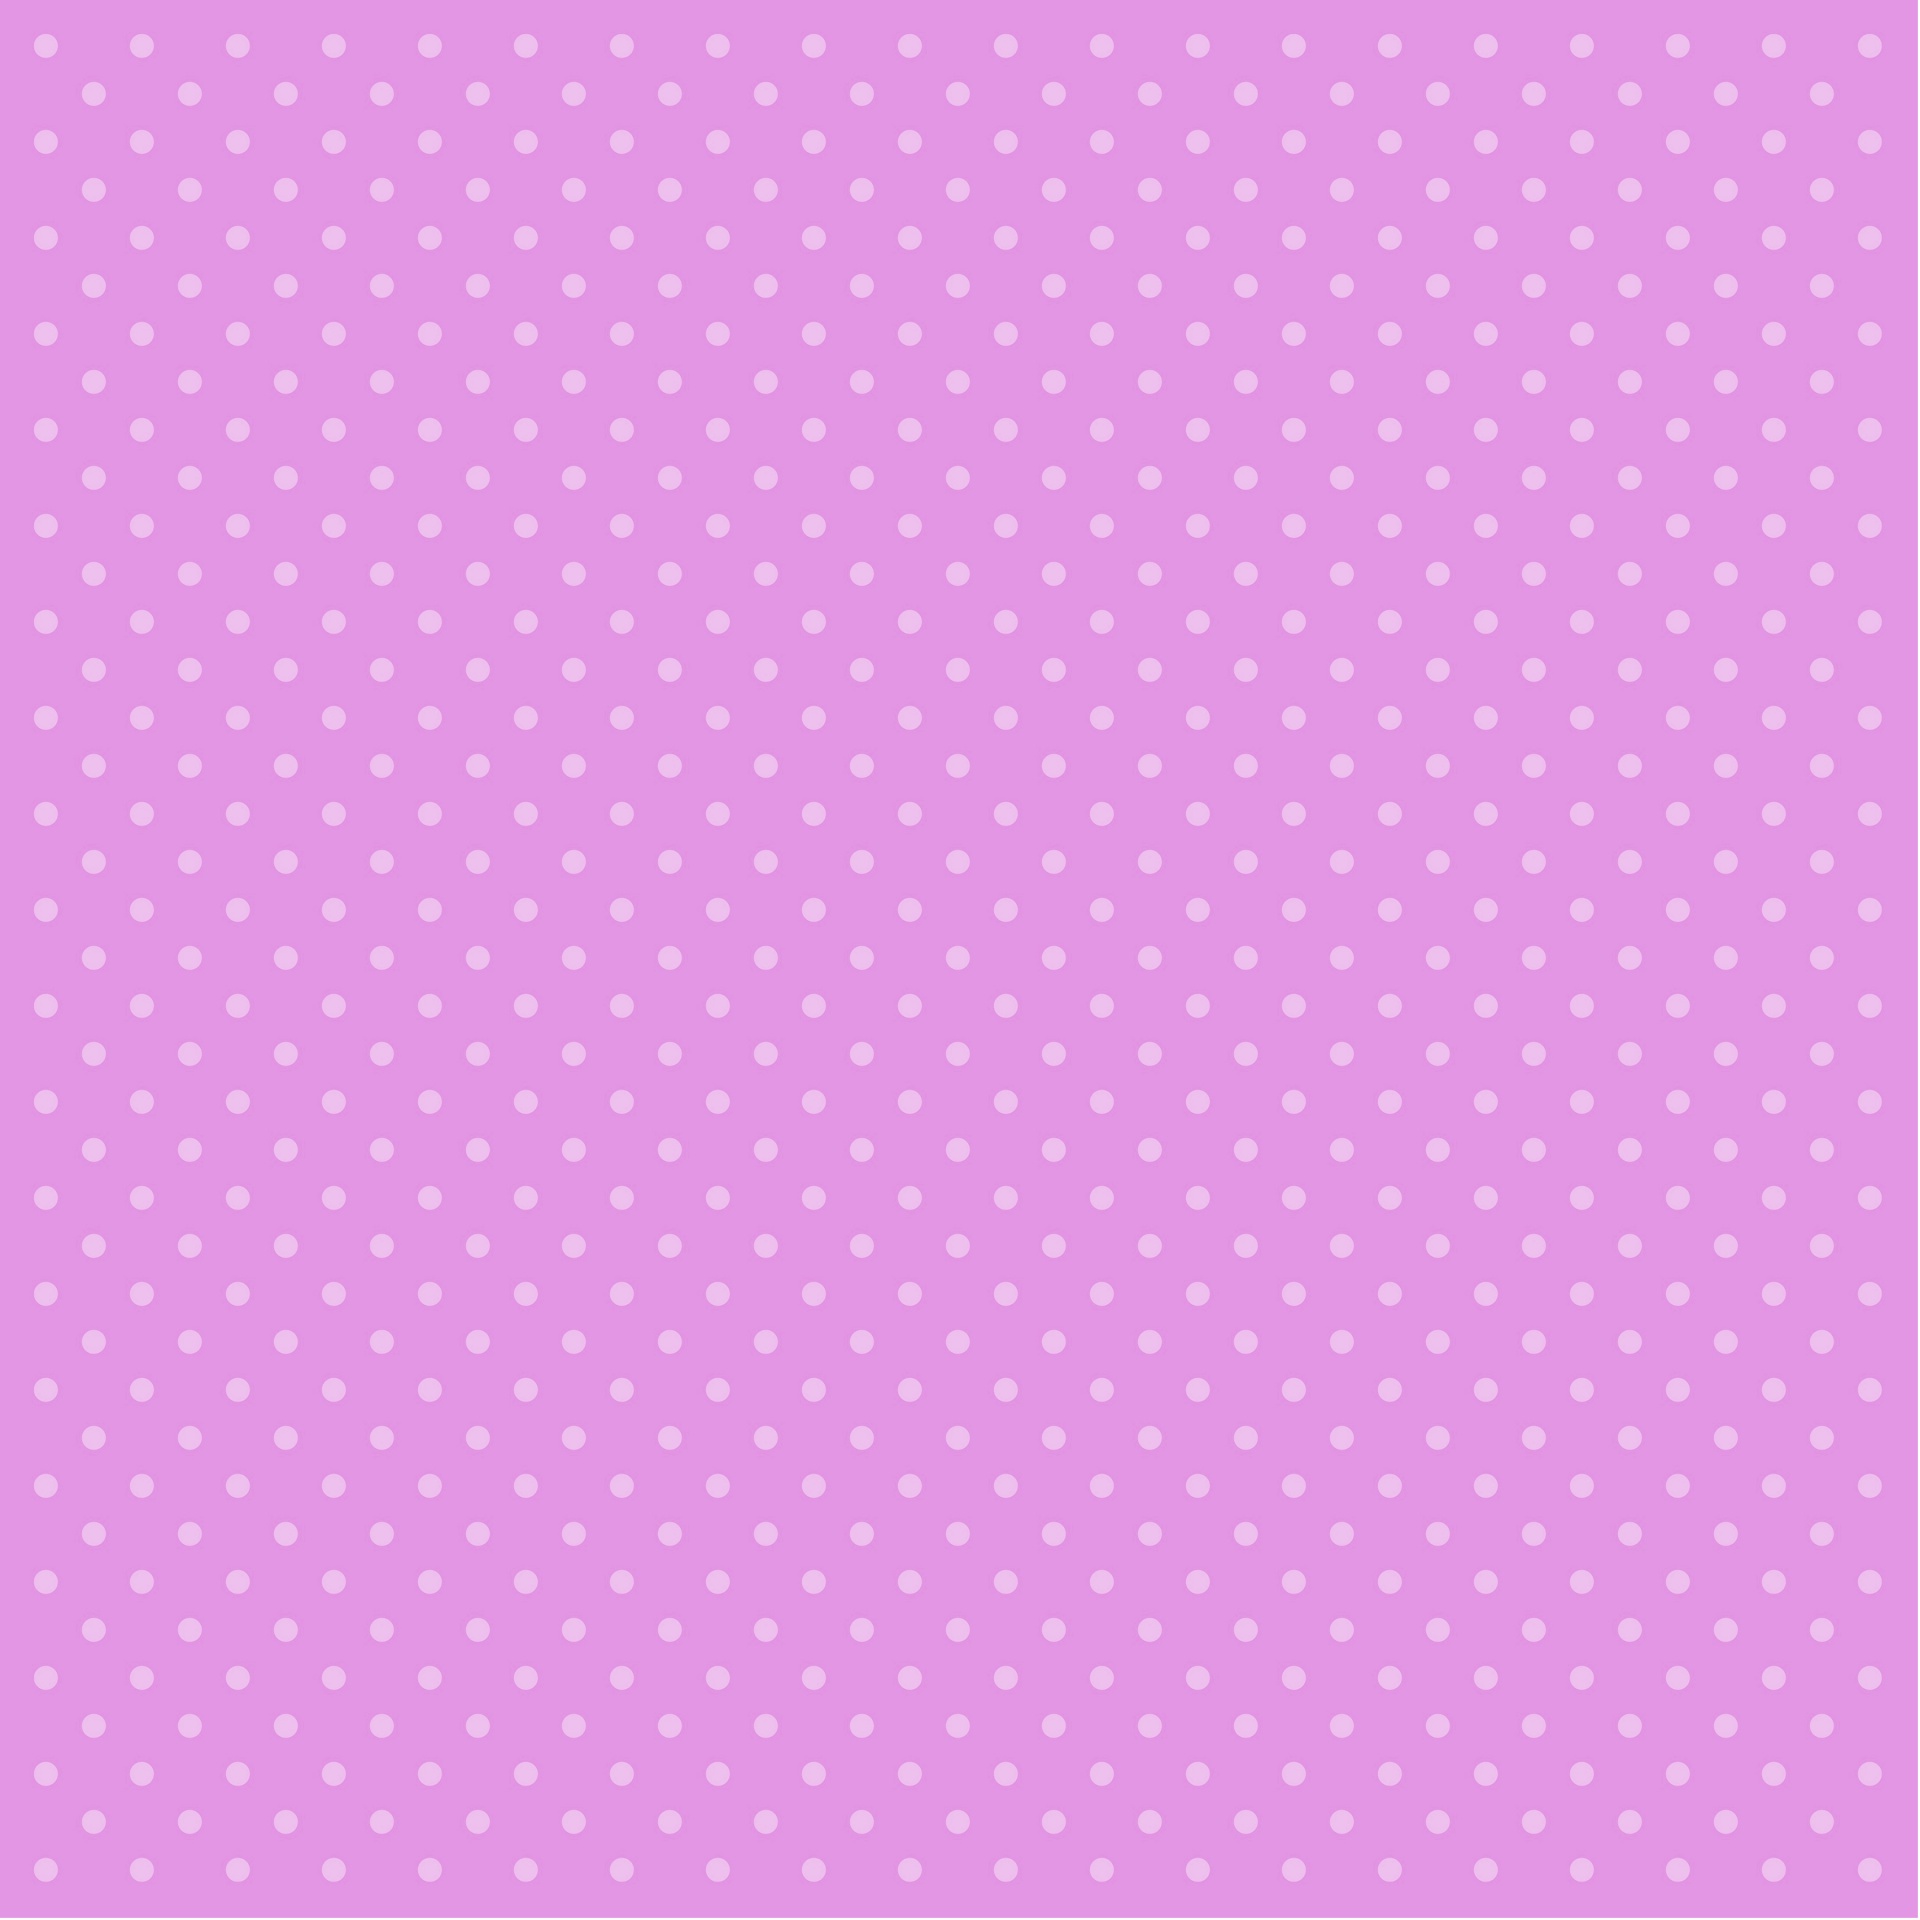 Polka Dots Pink Lavender